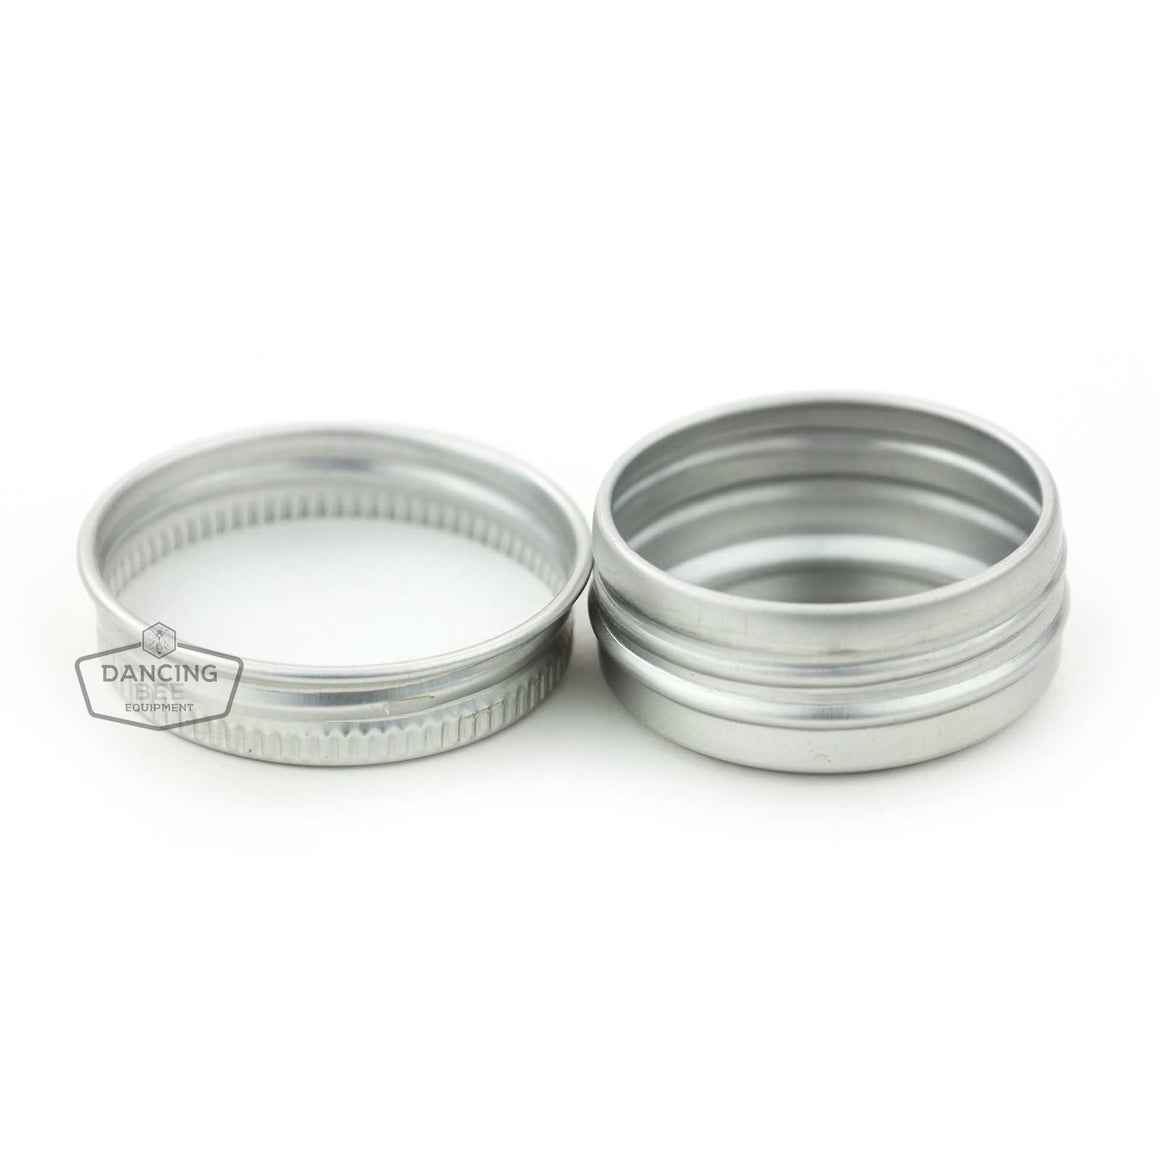 15 g Small Aluminum Tins | 50 Pack